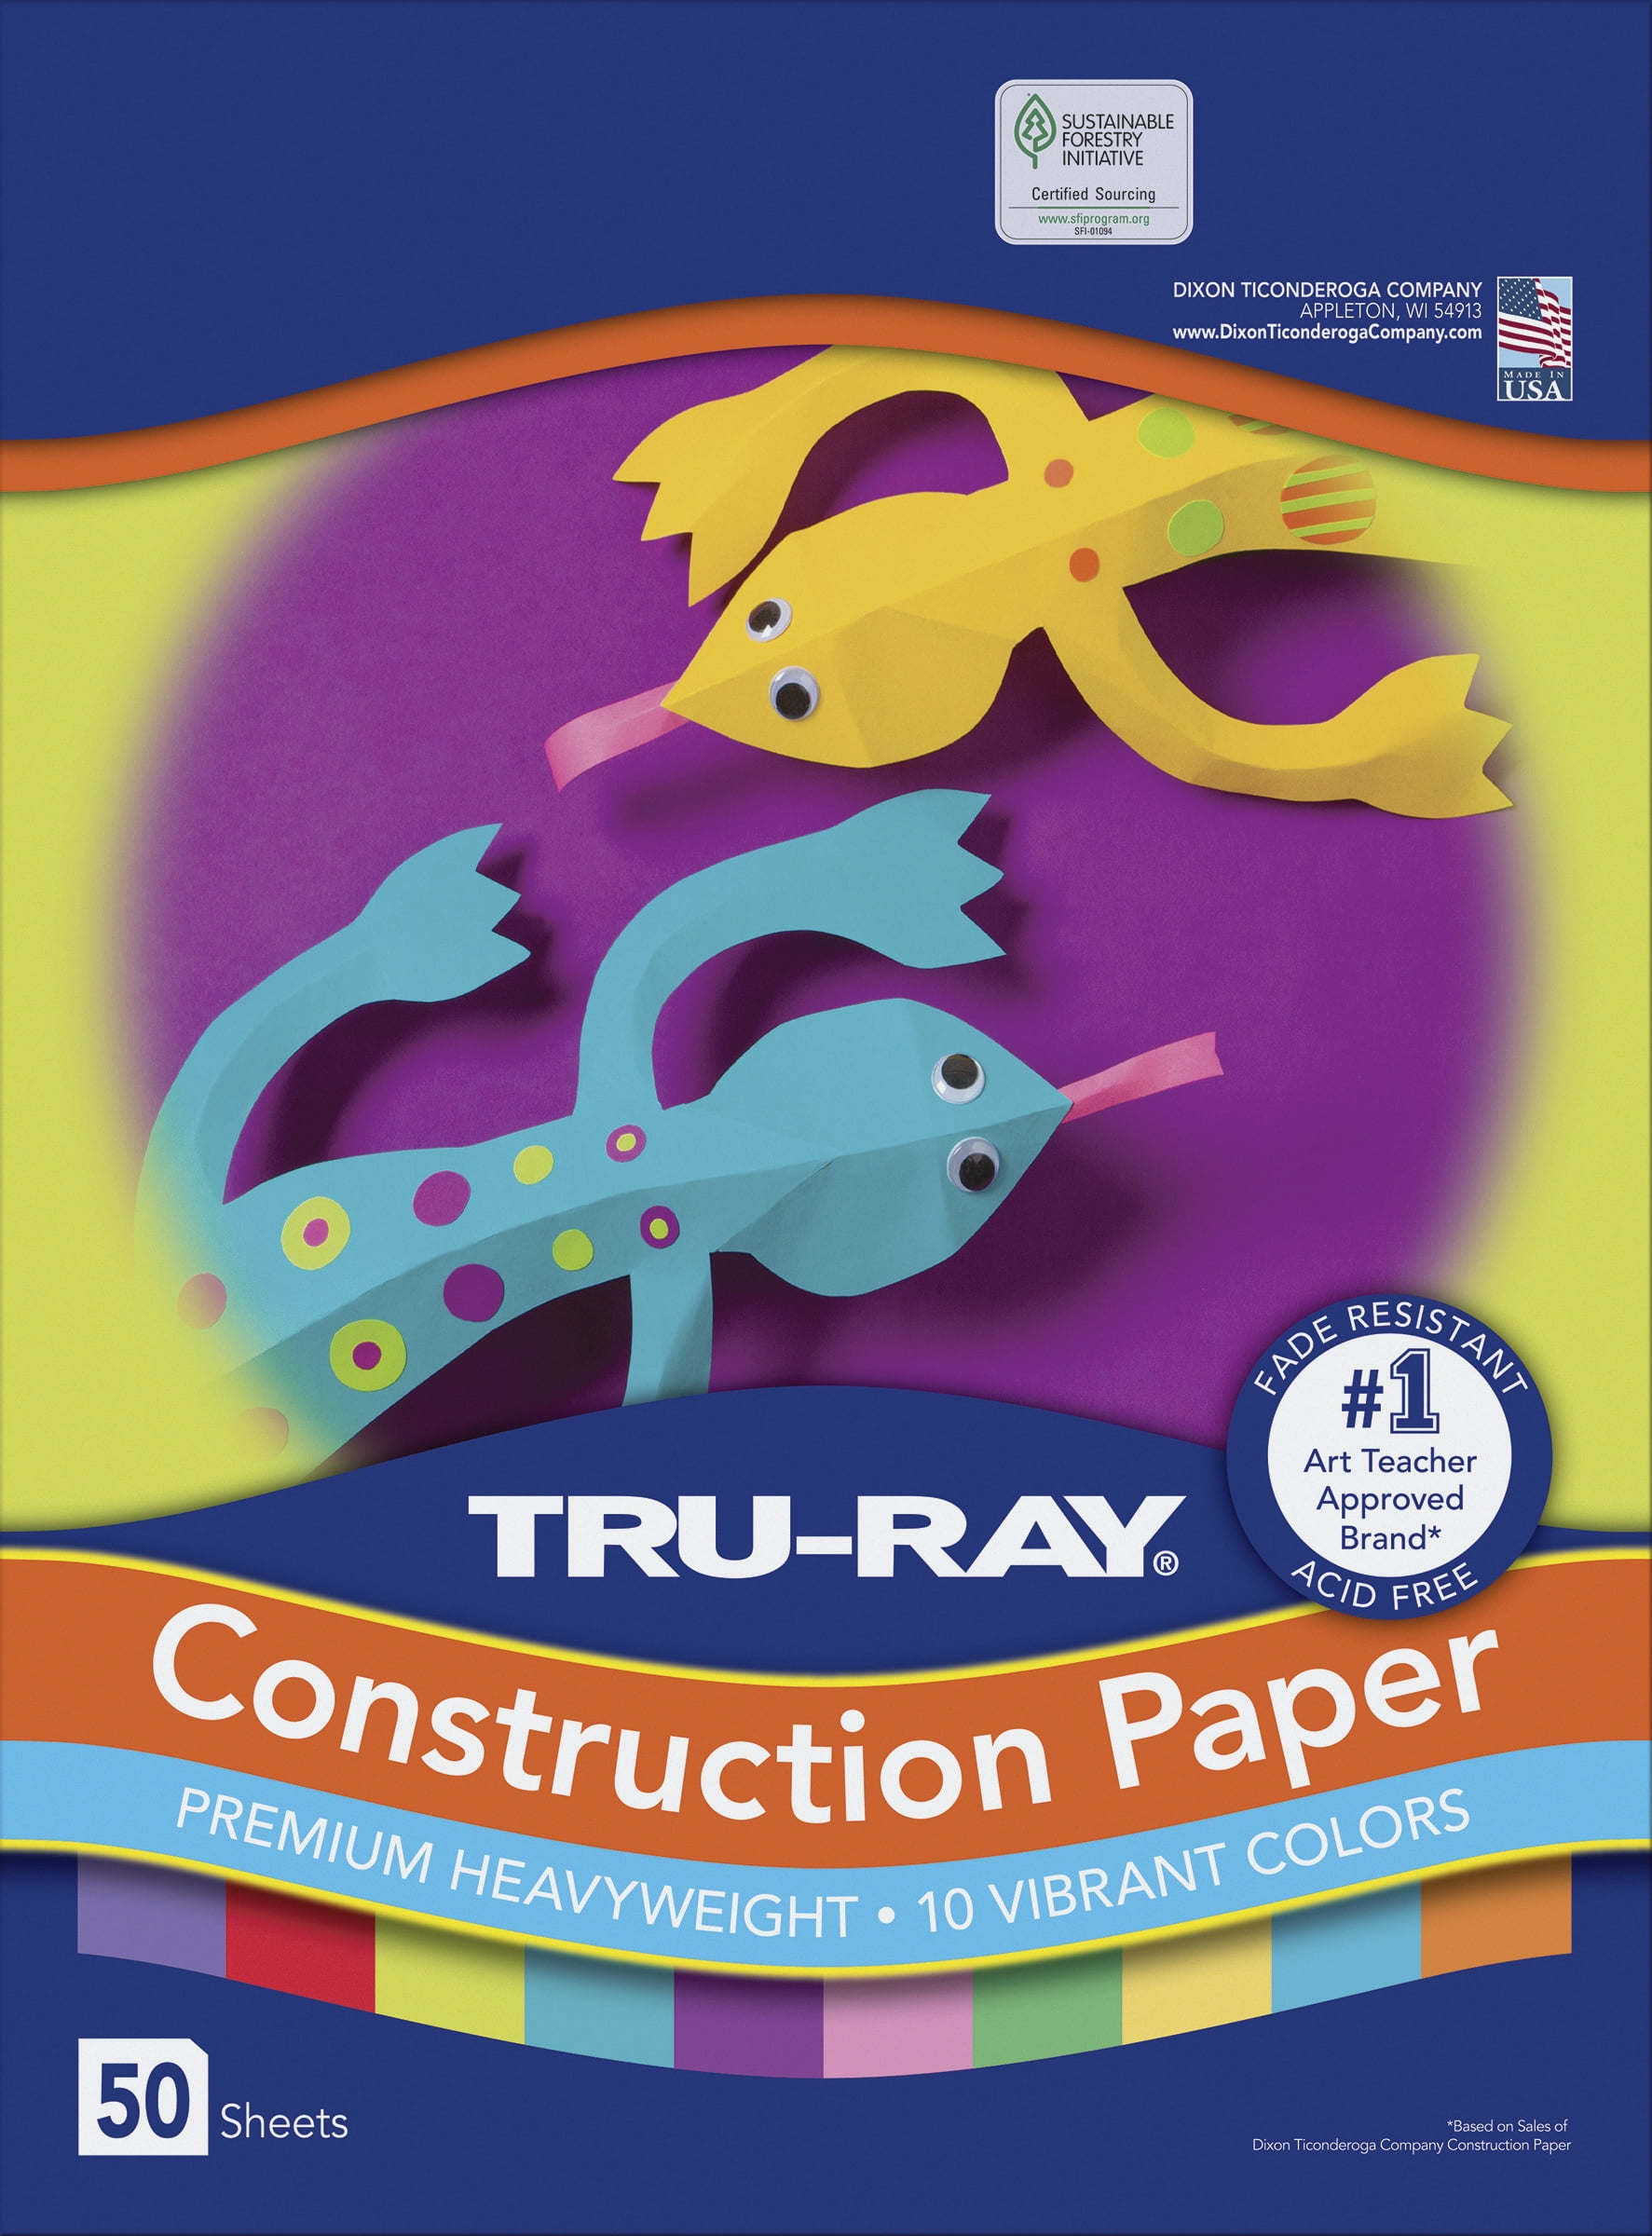 Construction Paper, 5 Assorted Hot Colors, 9 x 12, 50 Sheets - PAC6596, Dixon Ticonderoga Co - Pacon